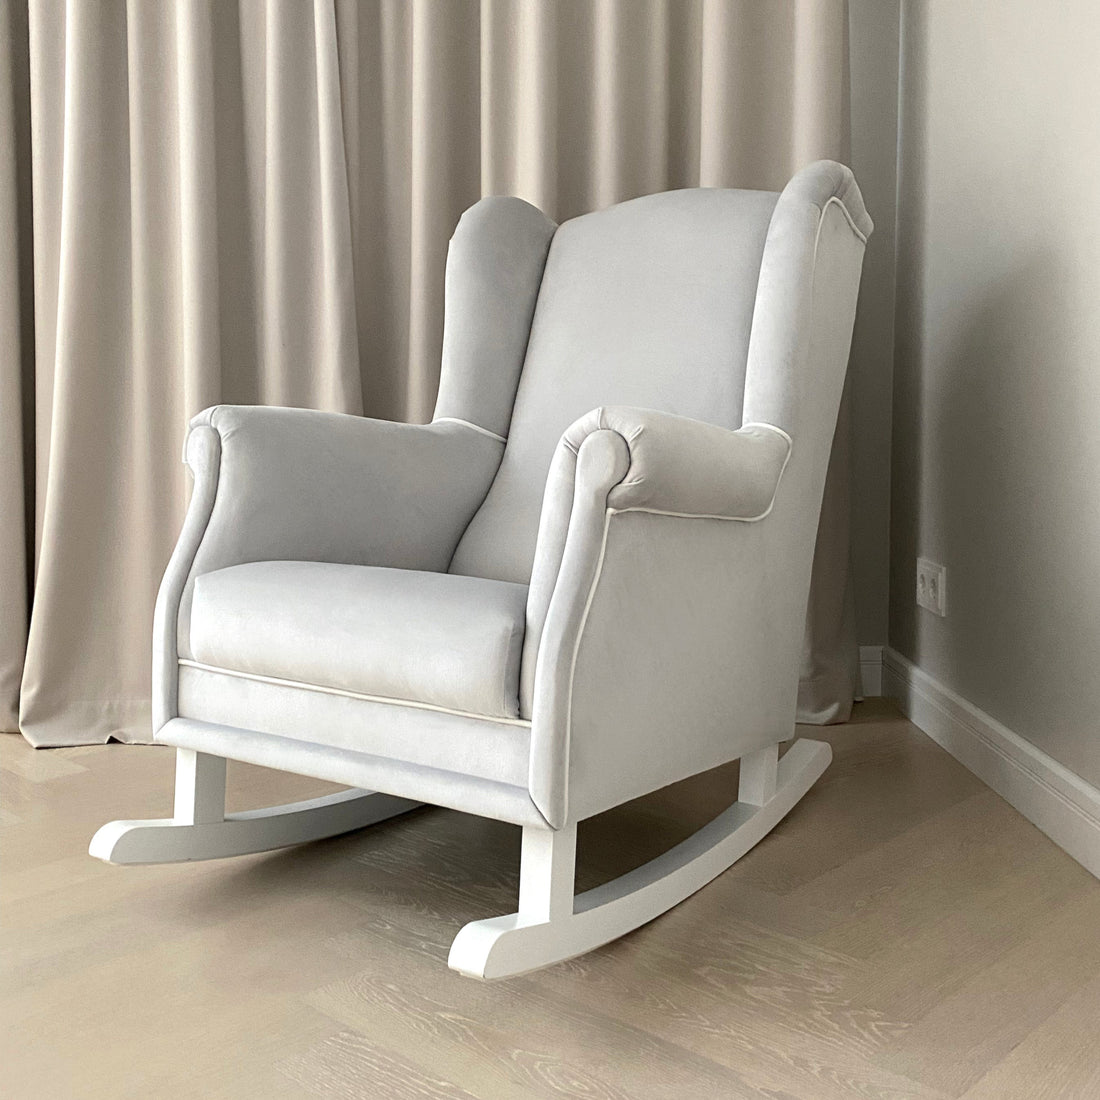 Rocking nursing chair PRESTIGE silver-grey | handcrafted rocking nursing chair | luxury baby furniture | grey nursing rocking chair